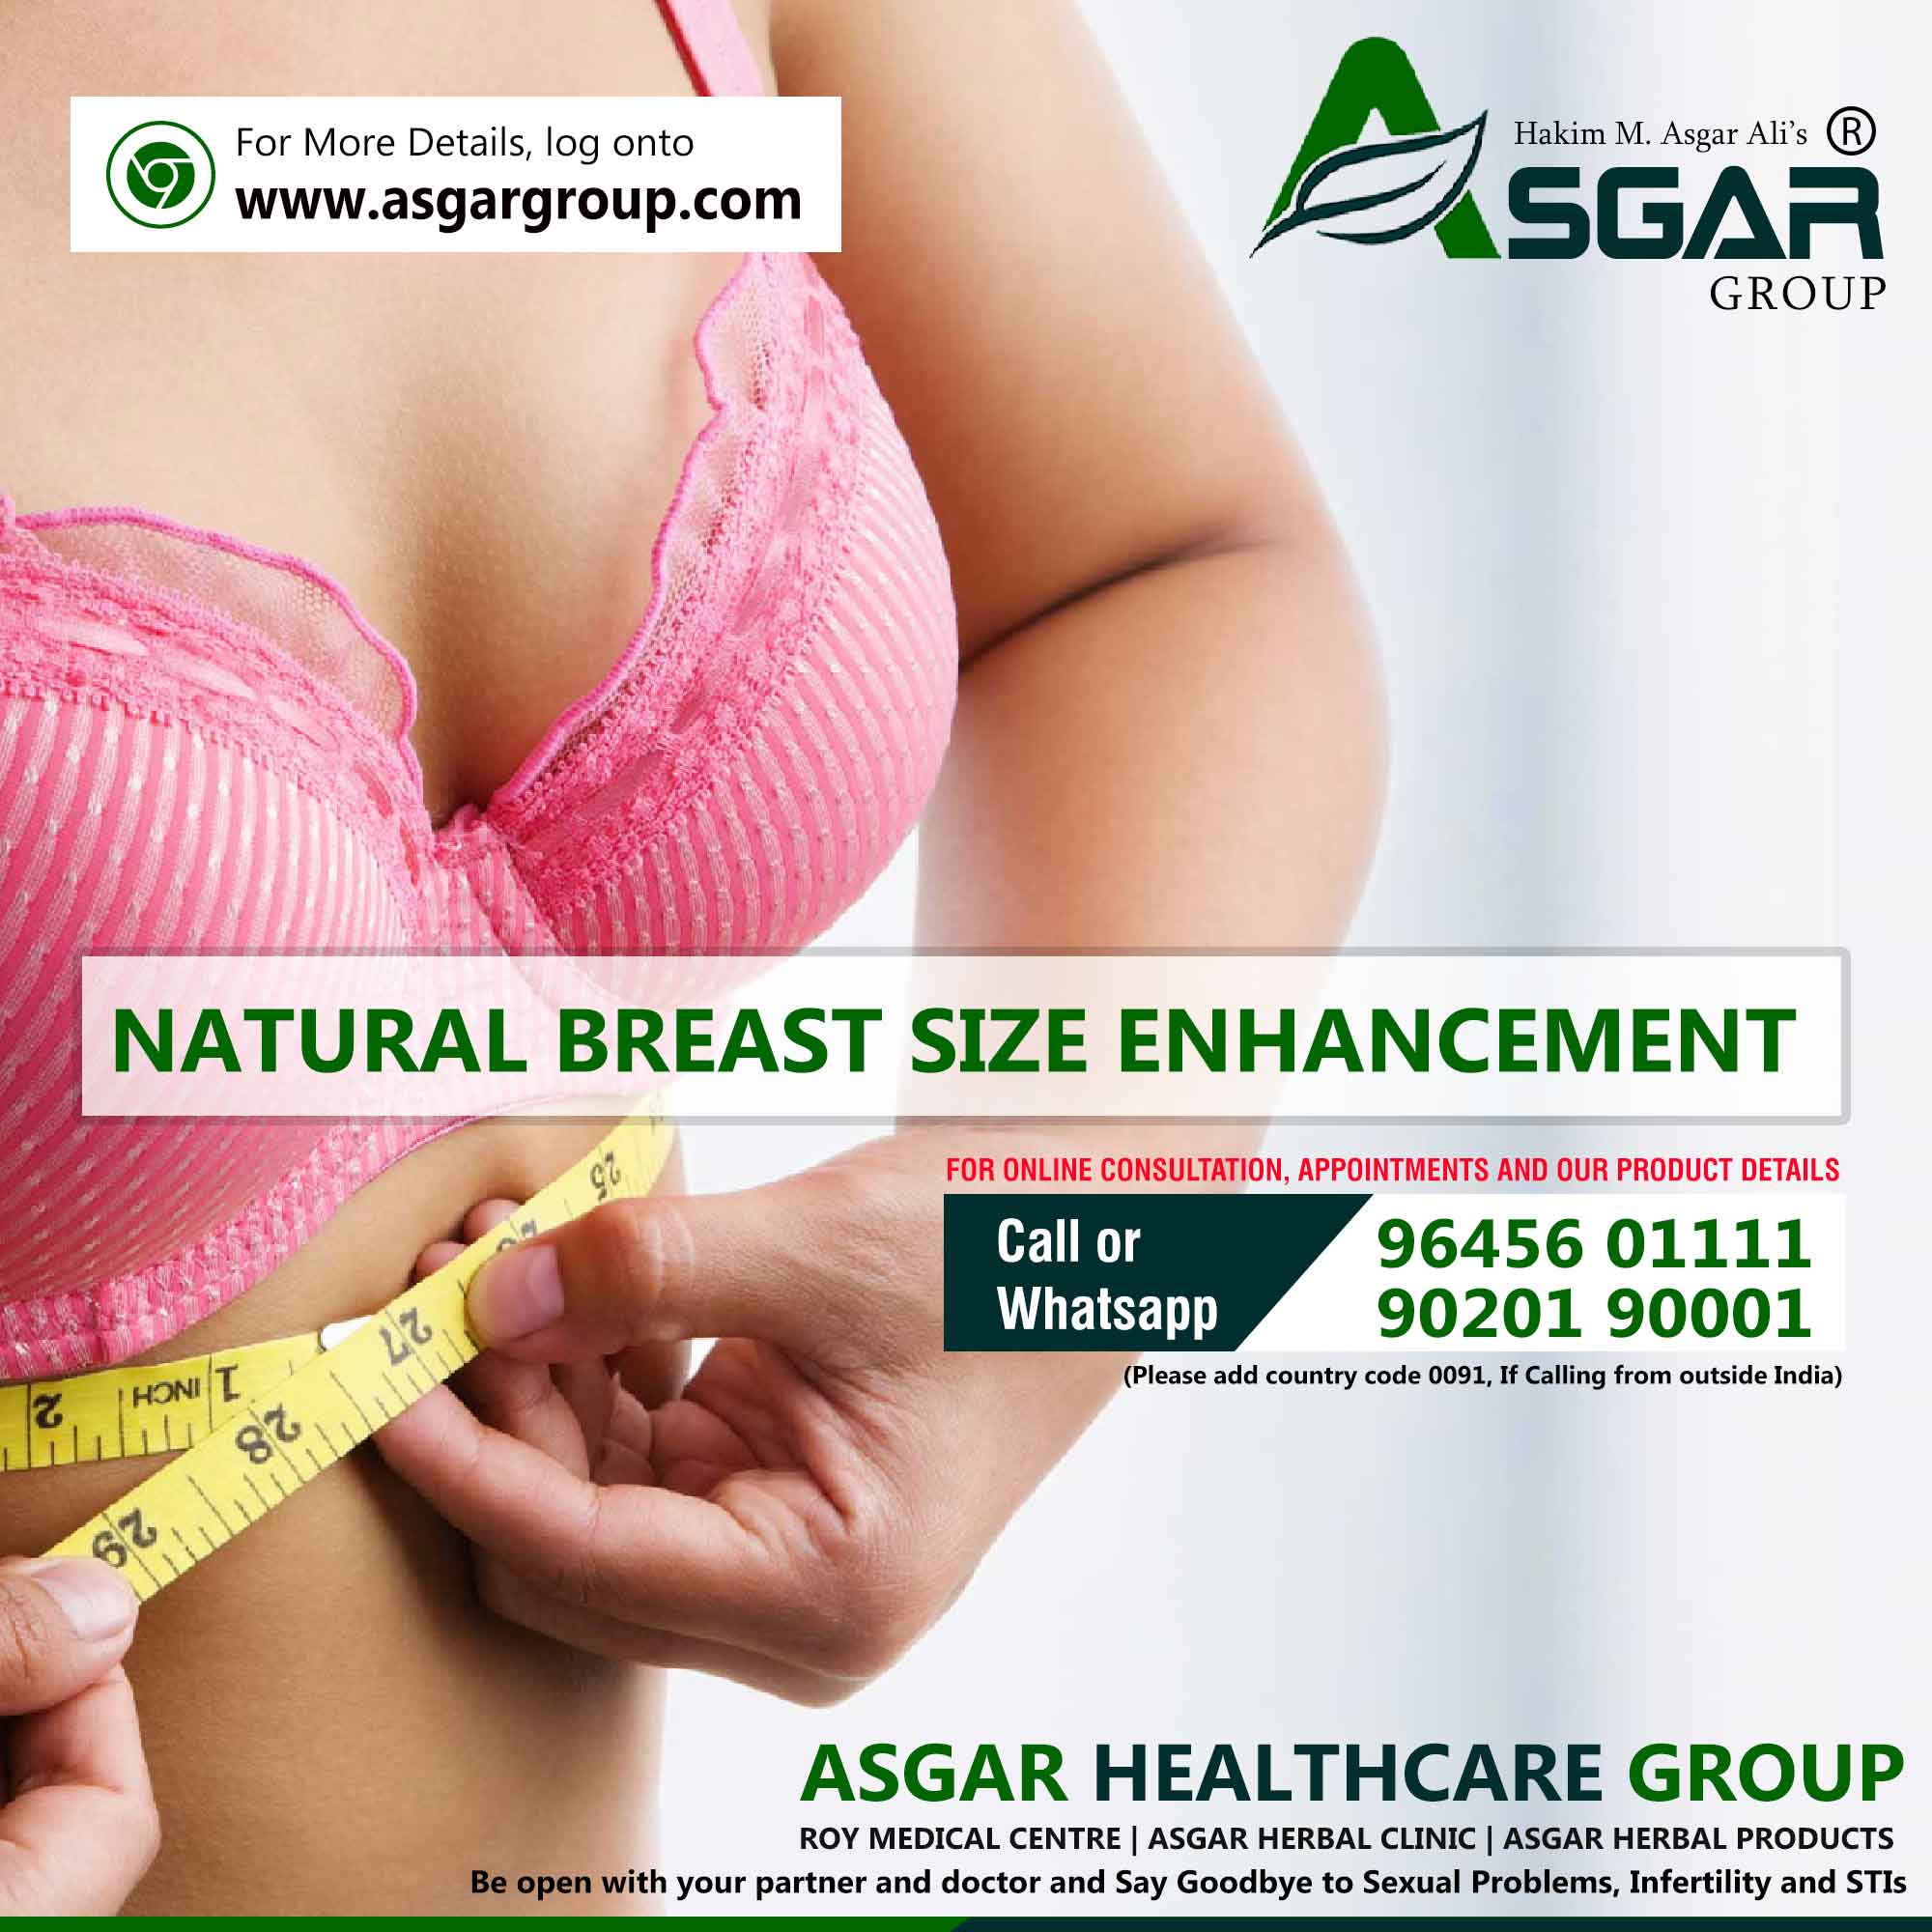 Natural breast size increase treatment enhancement big boobs medicine asgar healthcare group kerala tamilnadu india